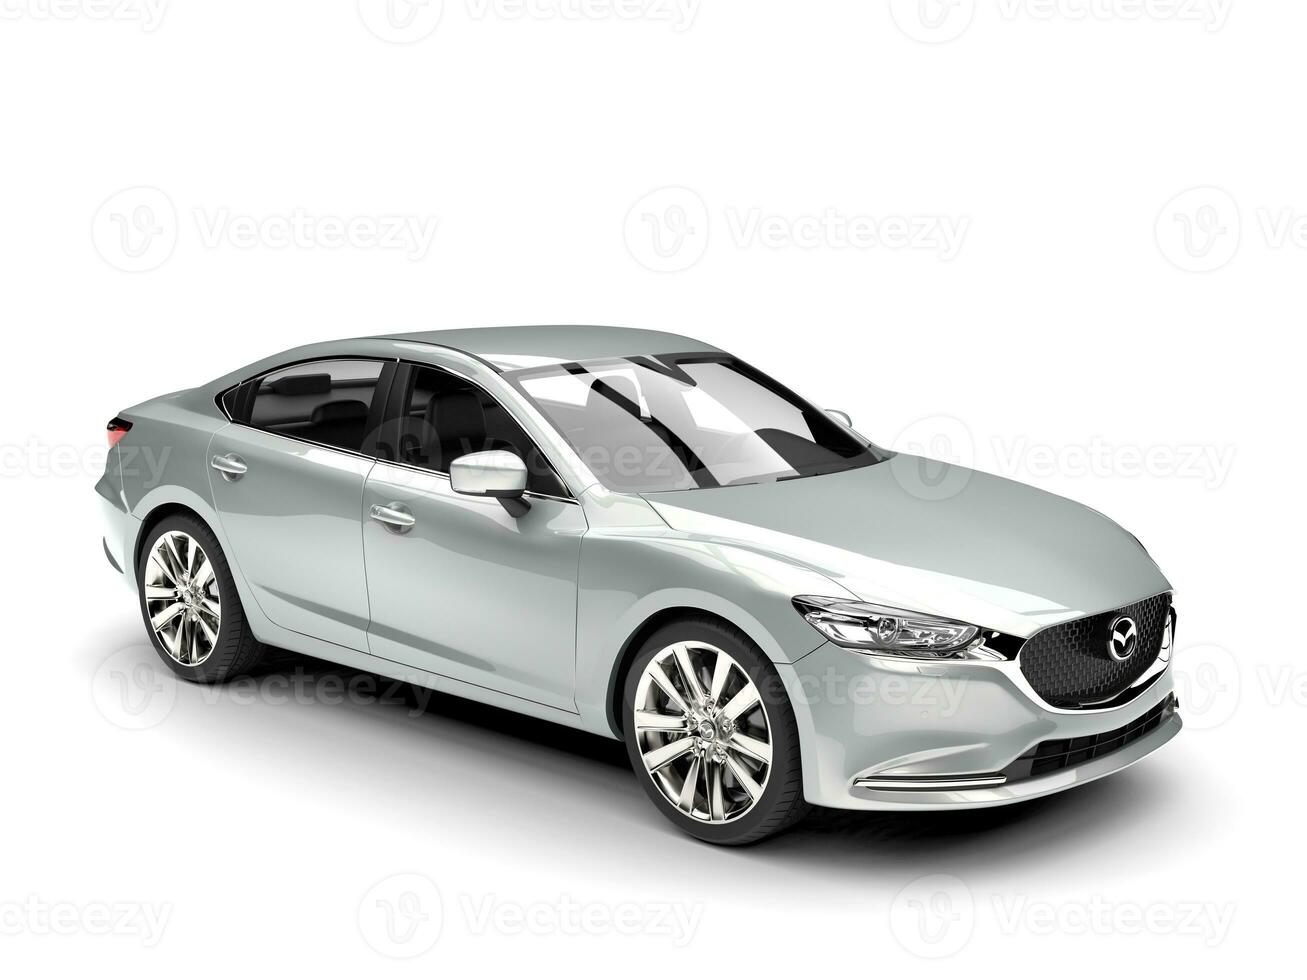 Silver Mazda 6 2018 - 2021 model - 3D Illustration - isolated on white background photo